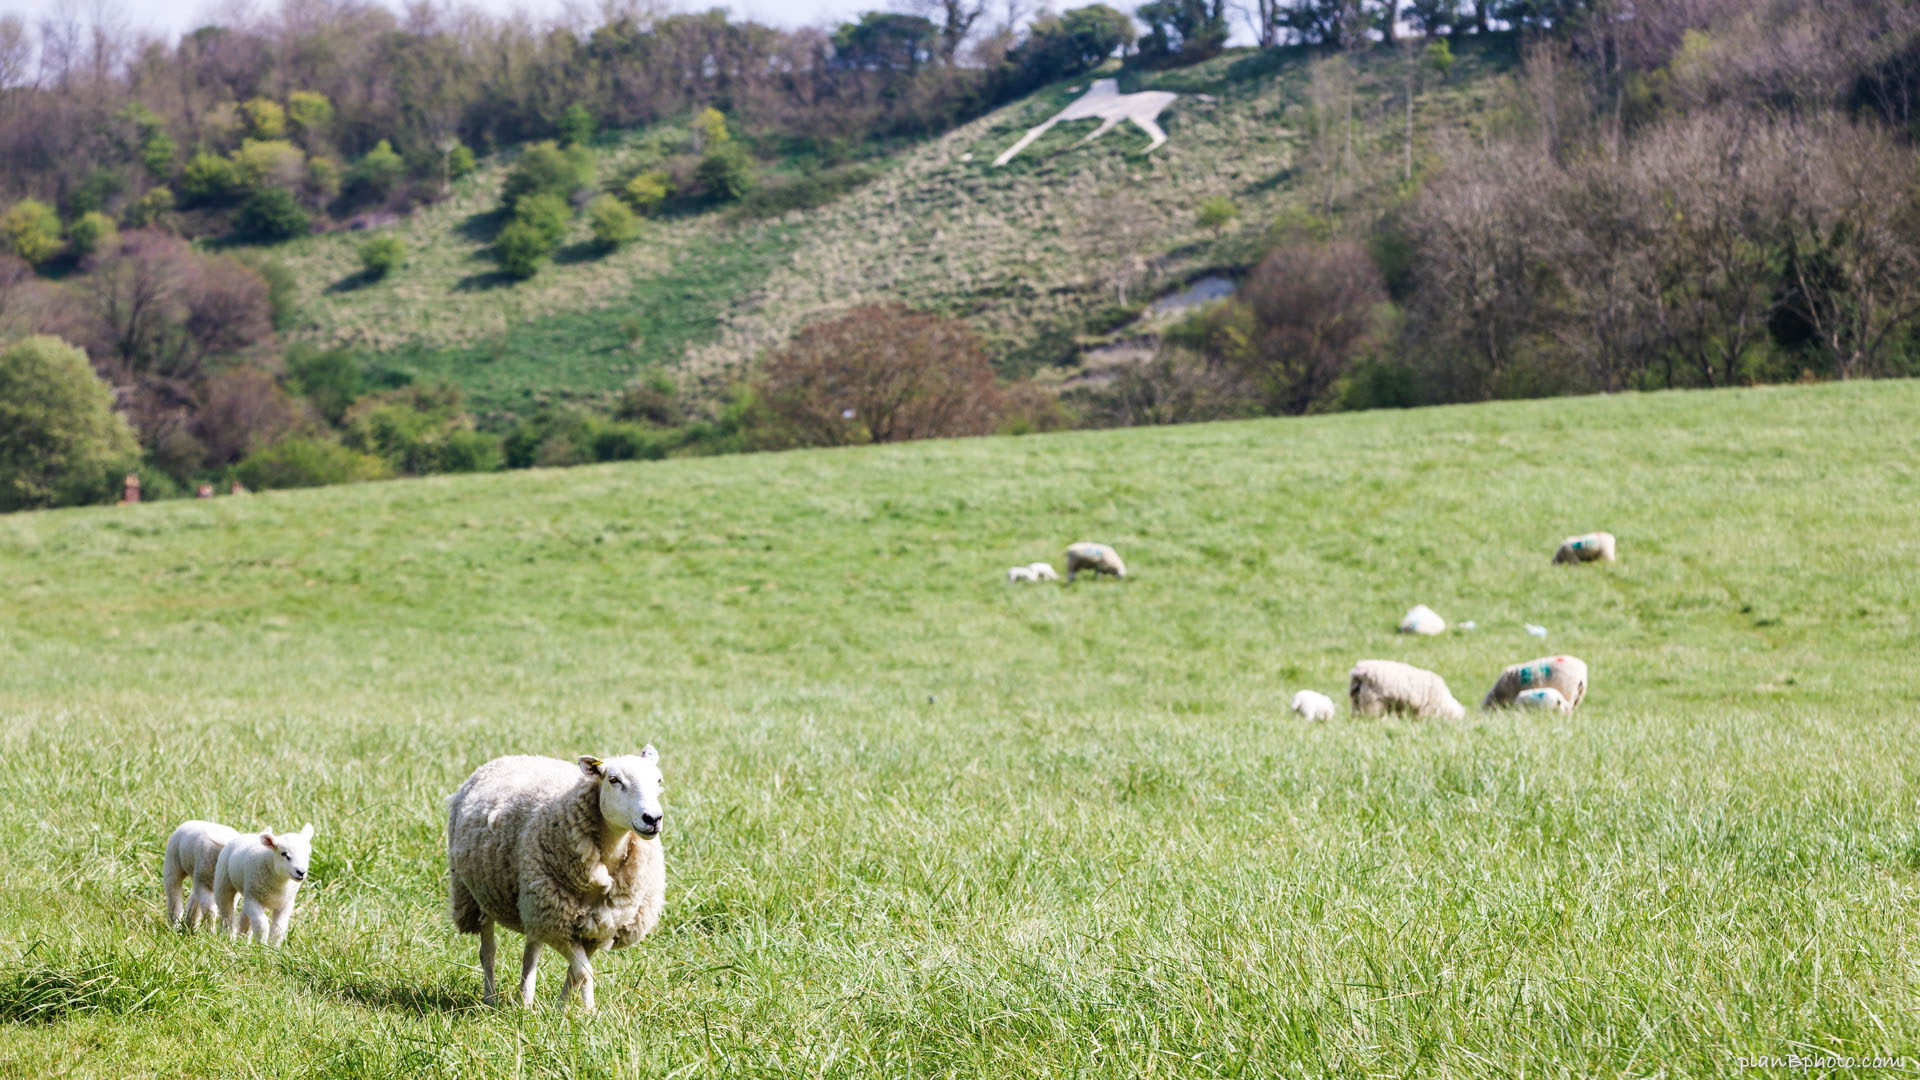 Sheep on a filed near a chalk hill figure